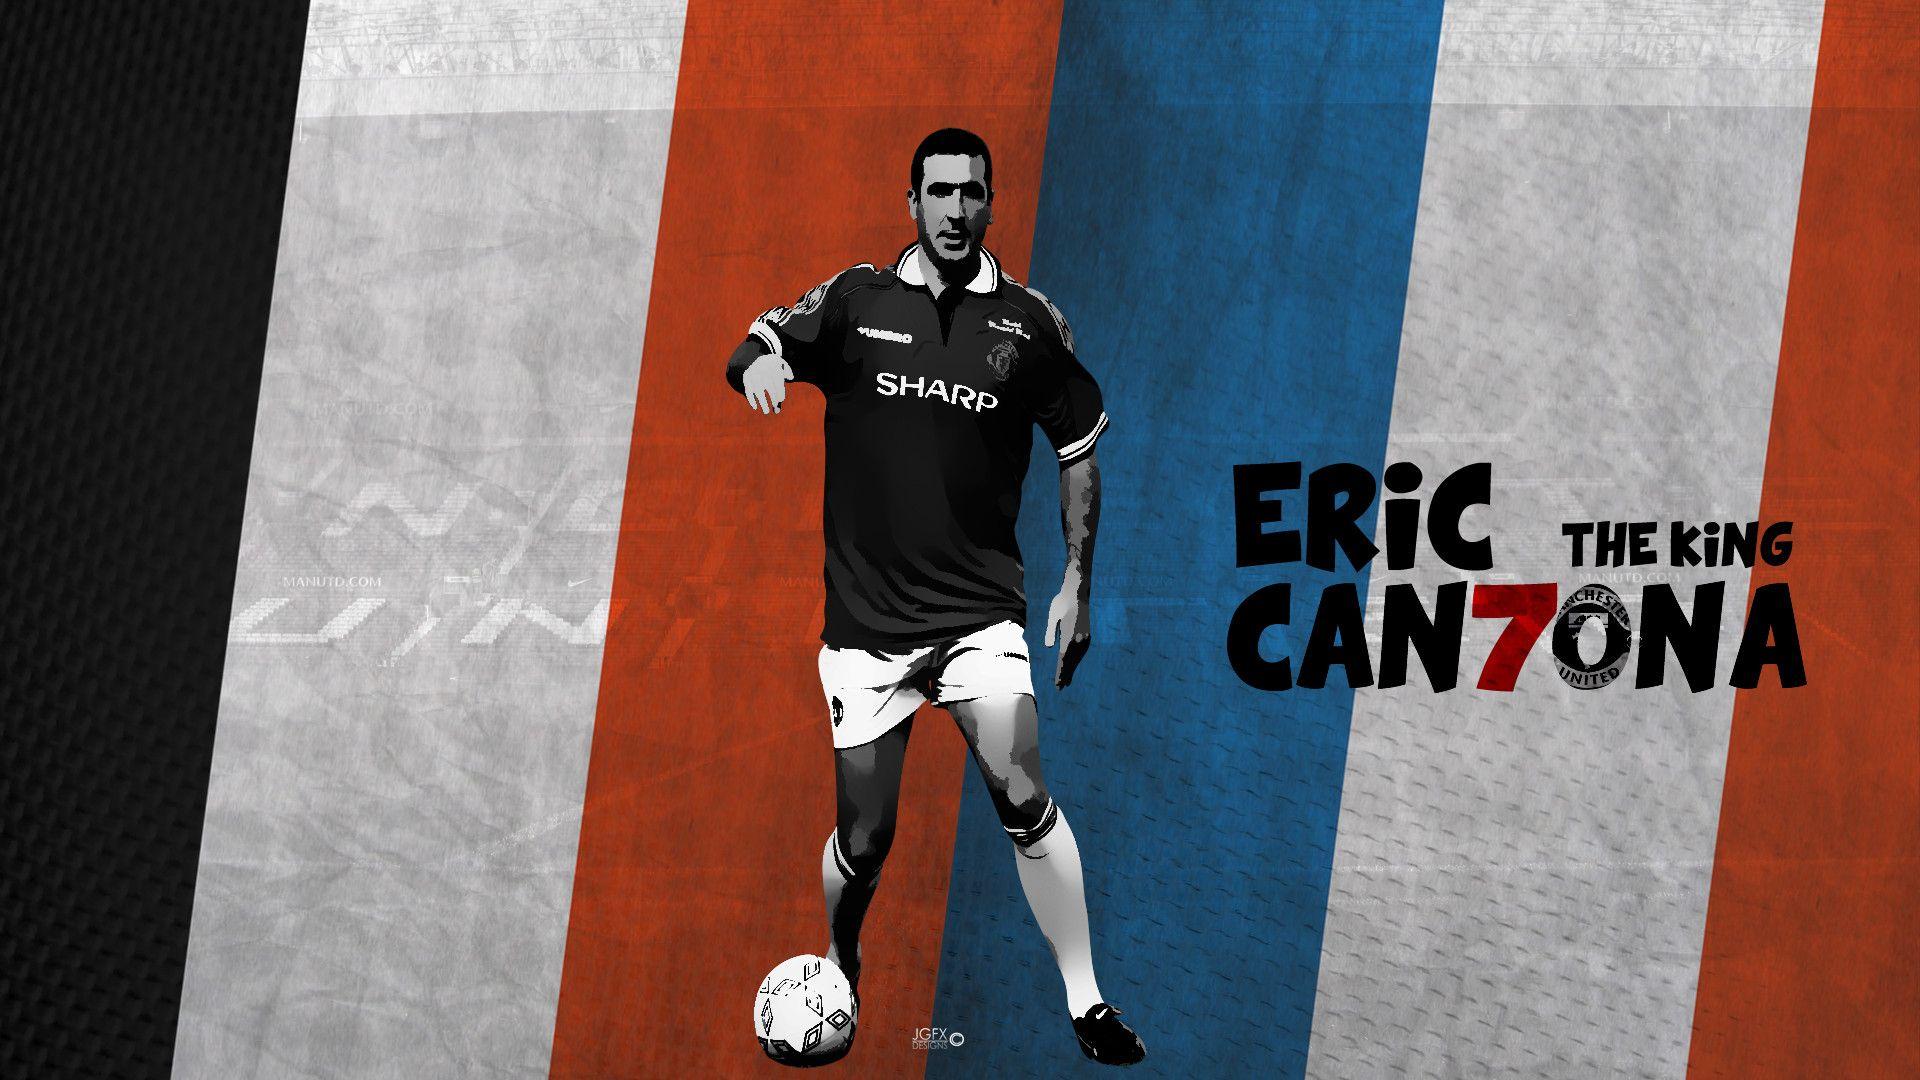 Awesome Eric Cantona wallpaper for desktop